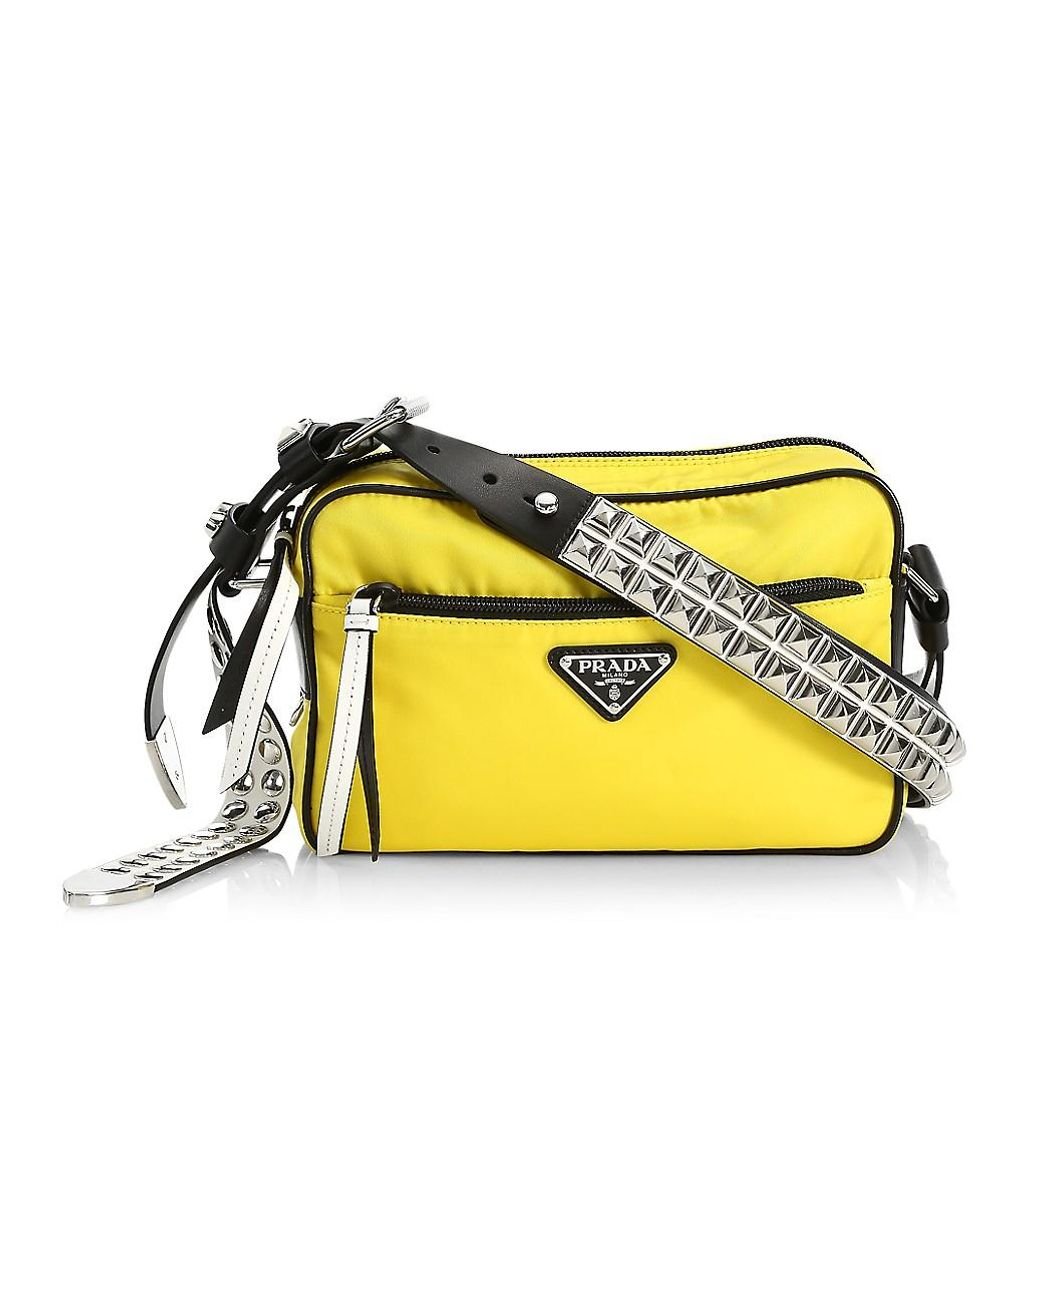 Prada Vela Nylon Studded Shoulder Bag in Yellow | Lyst